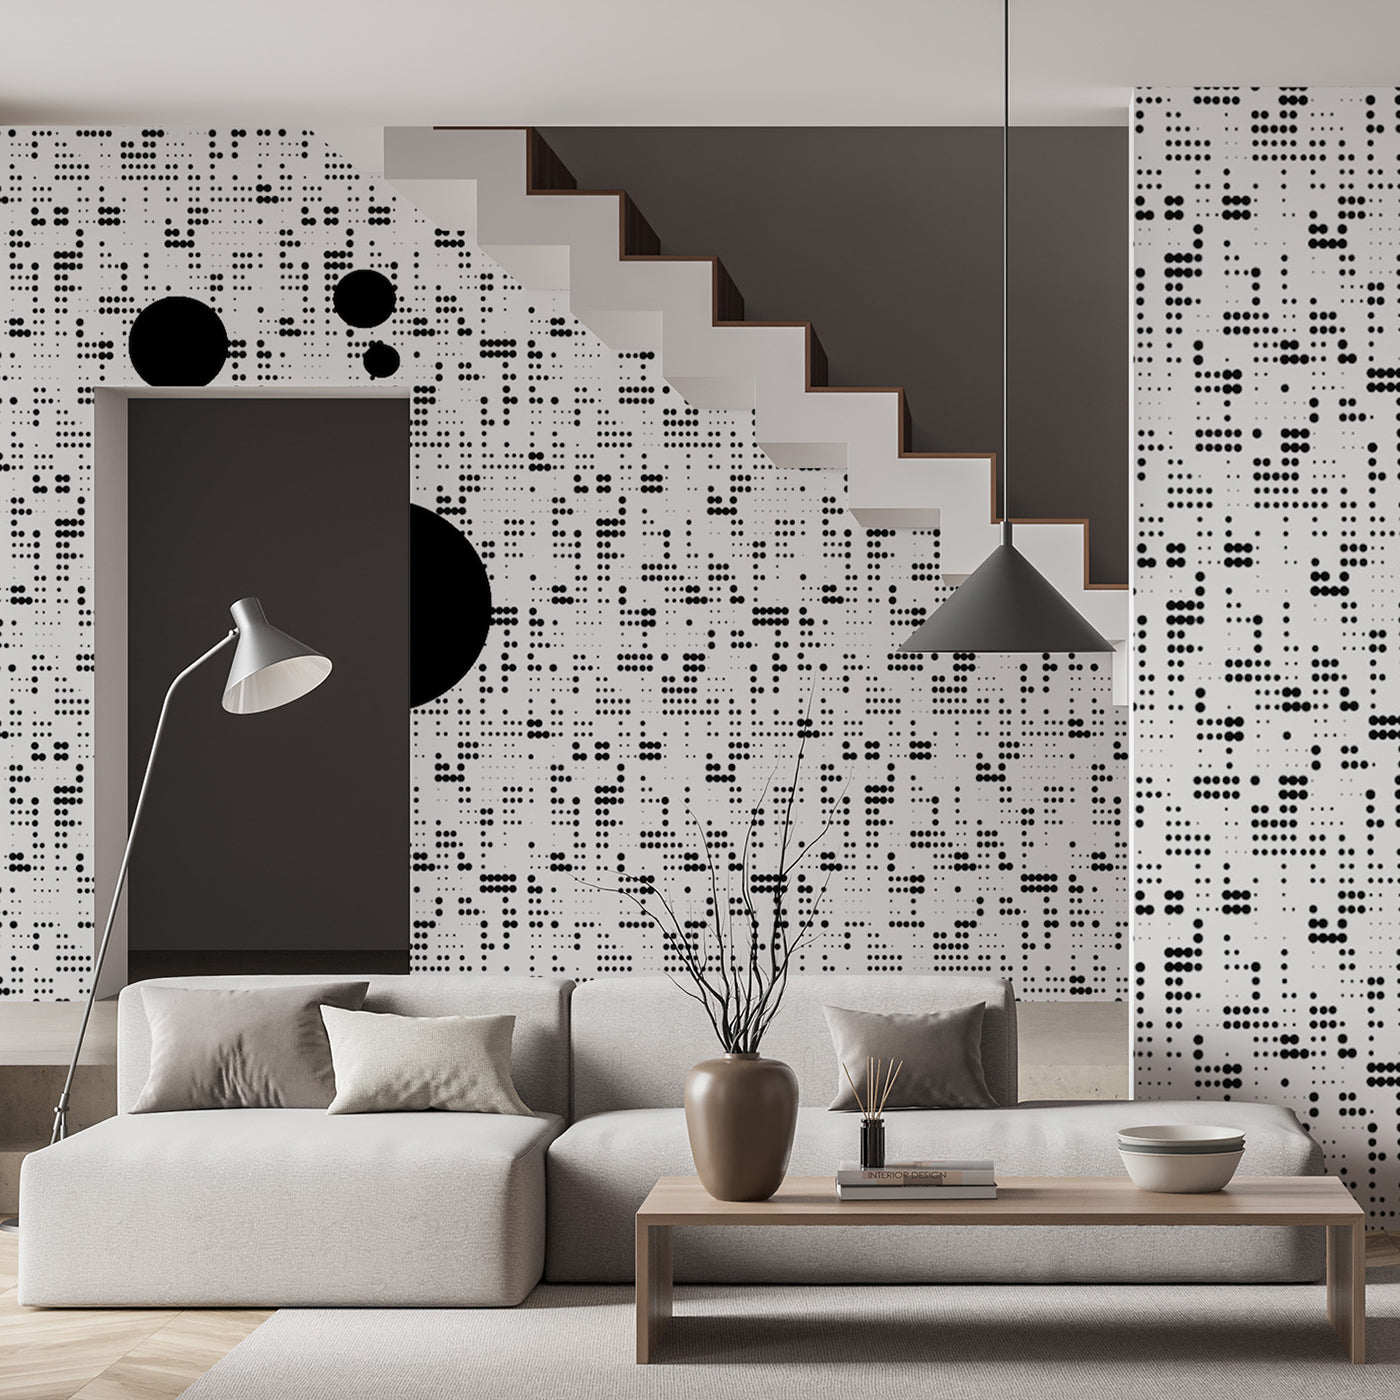 Bhaus100 Black & White Wallpaper - Alternative view 2